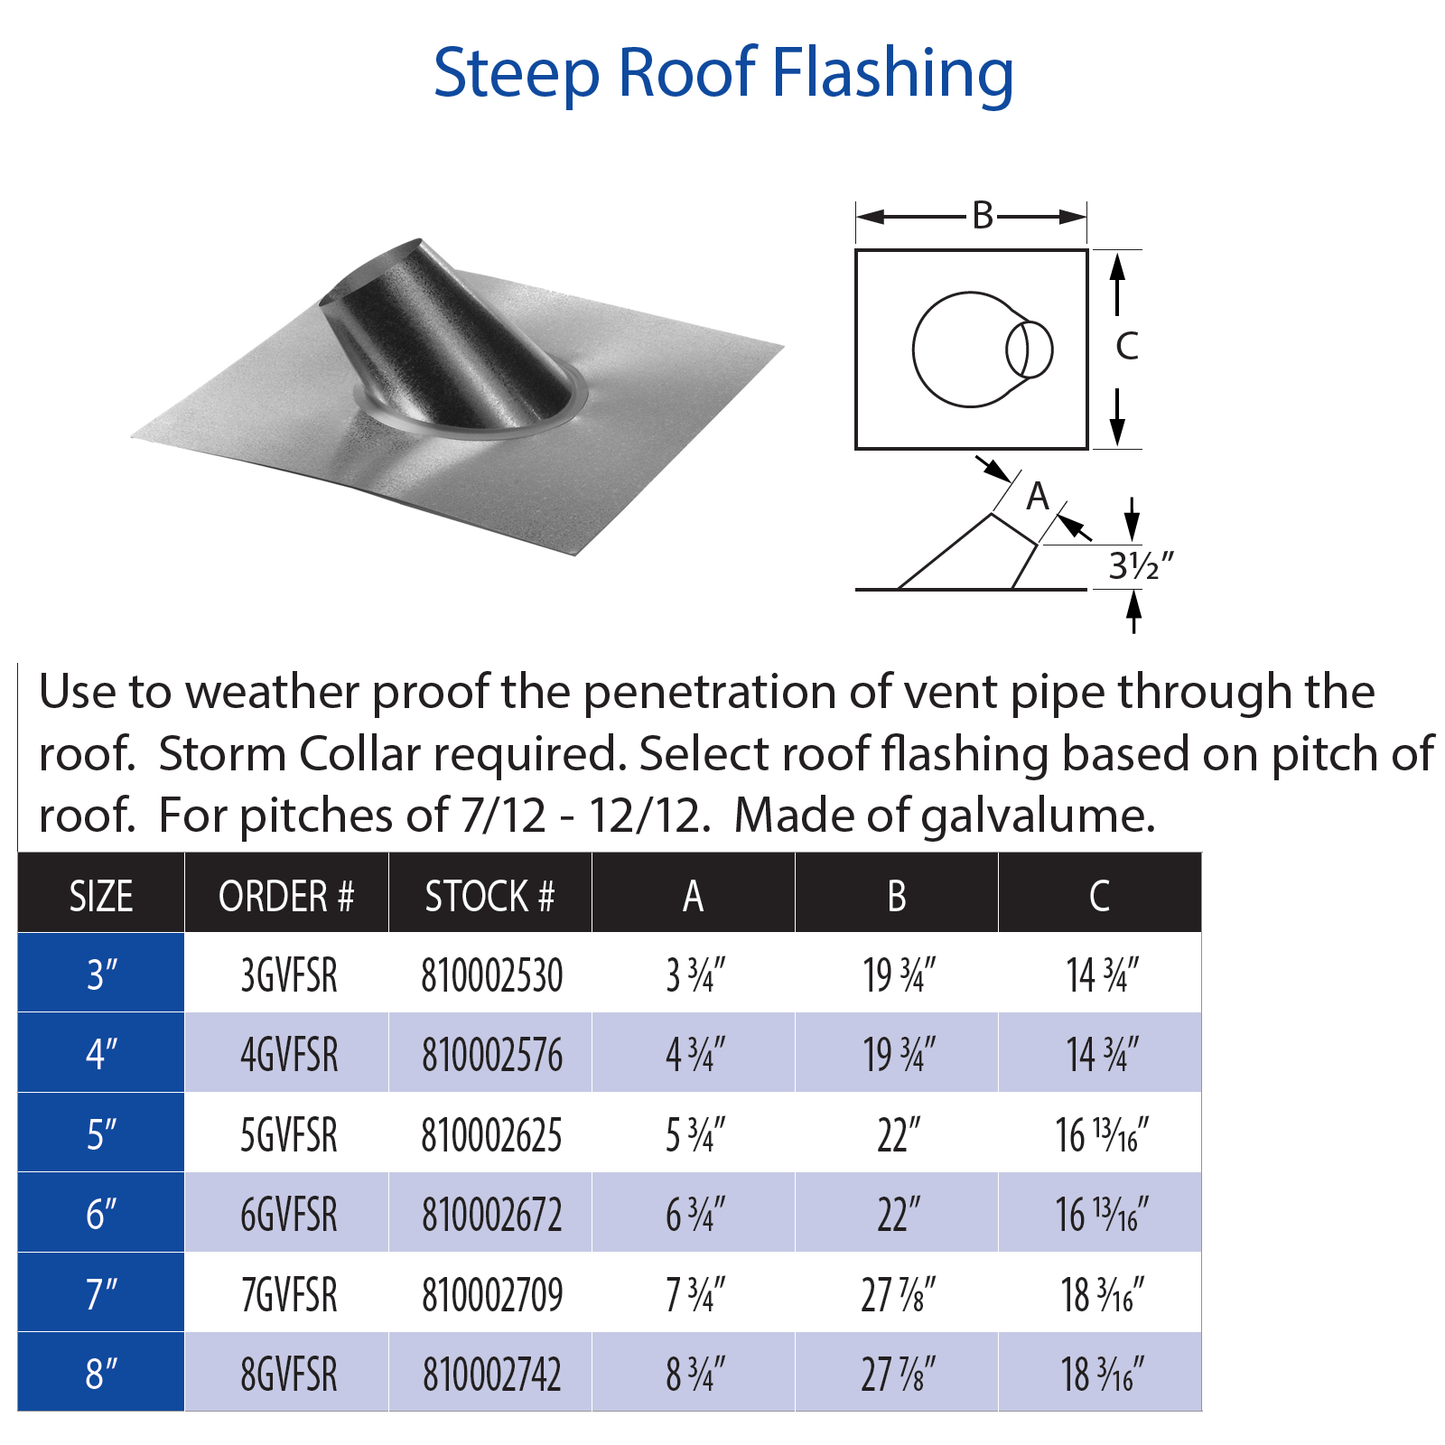 DuraVent Type B Steep Roof Flashing | 4GVFSR